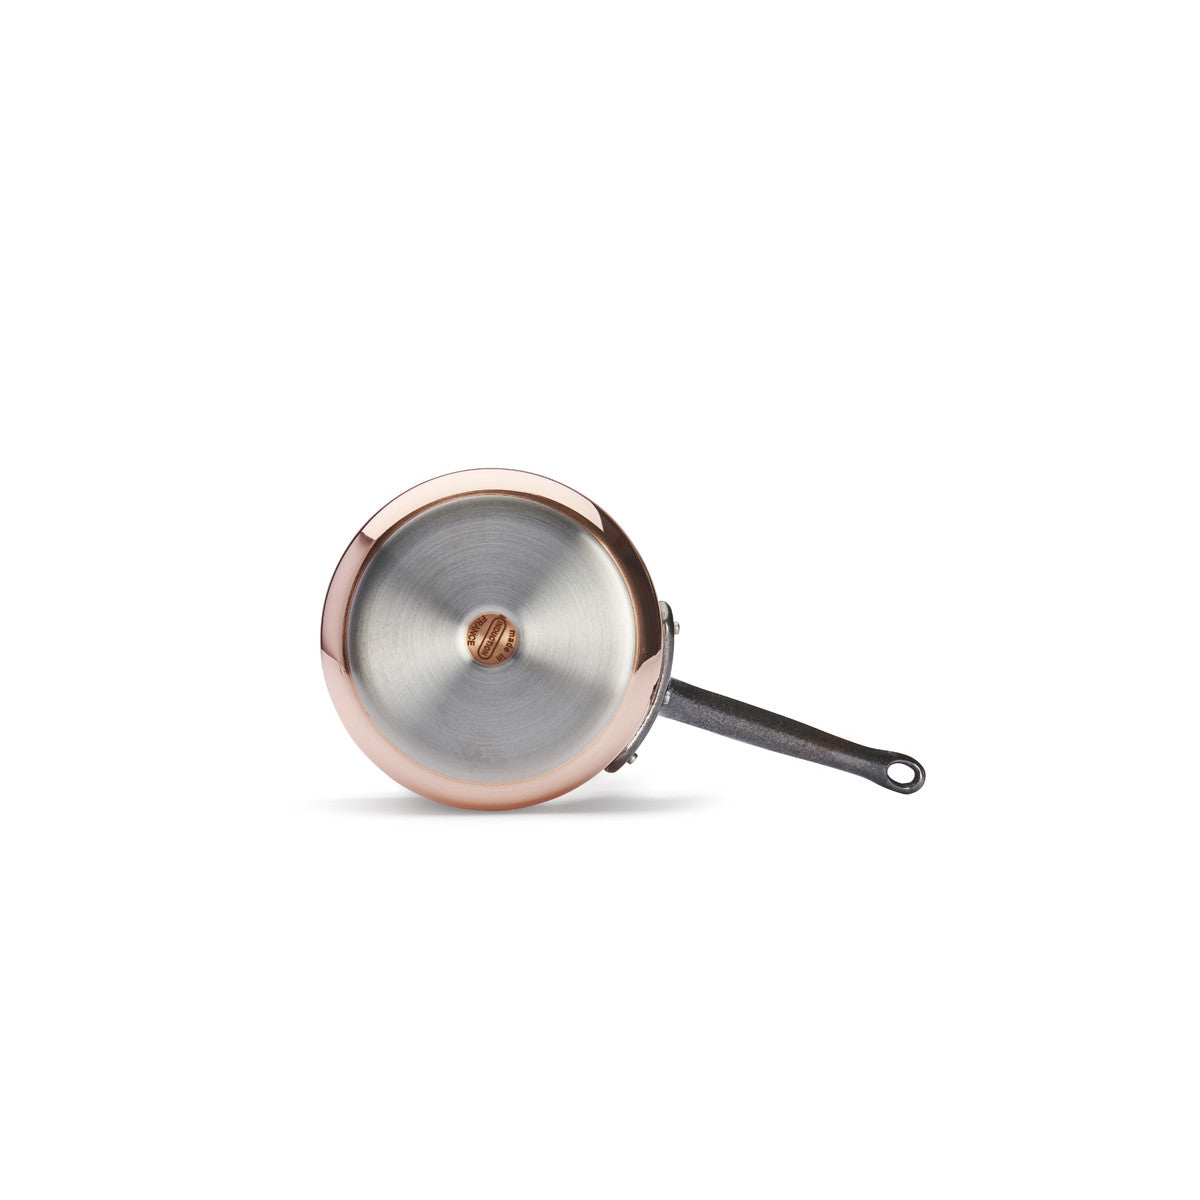 De Buyer Prima Matera copper saucepan for induction, cast-iron handle